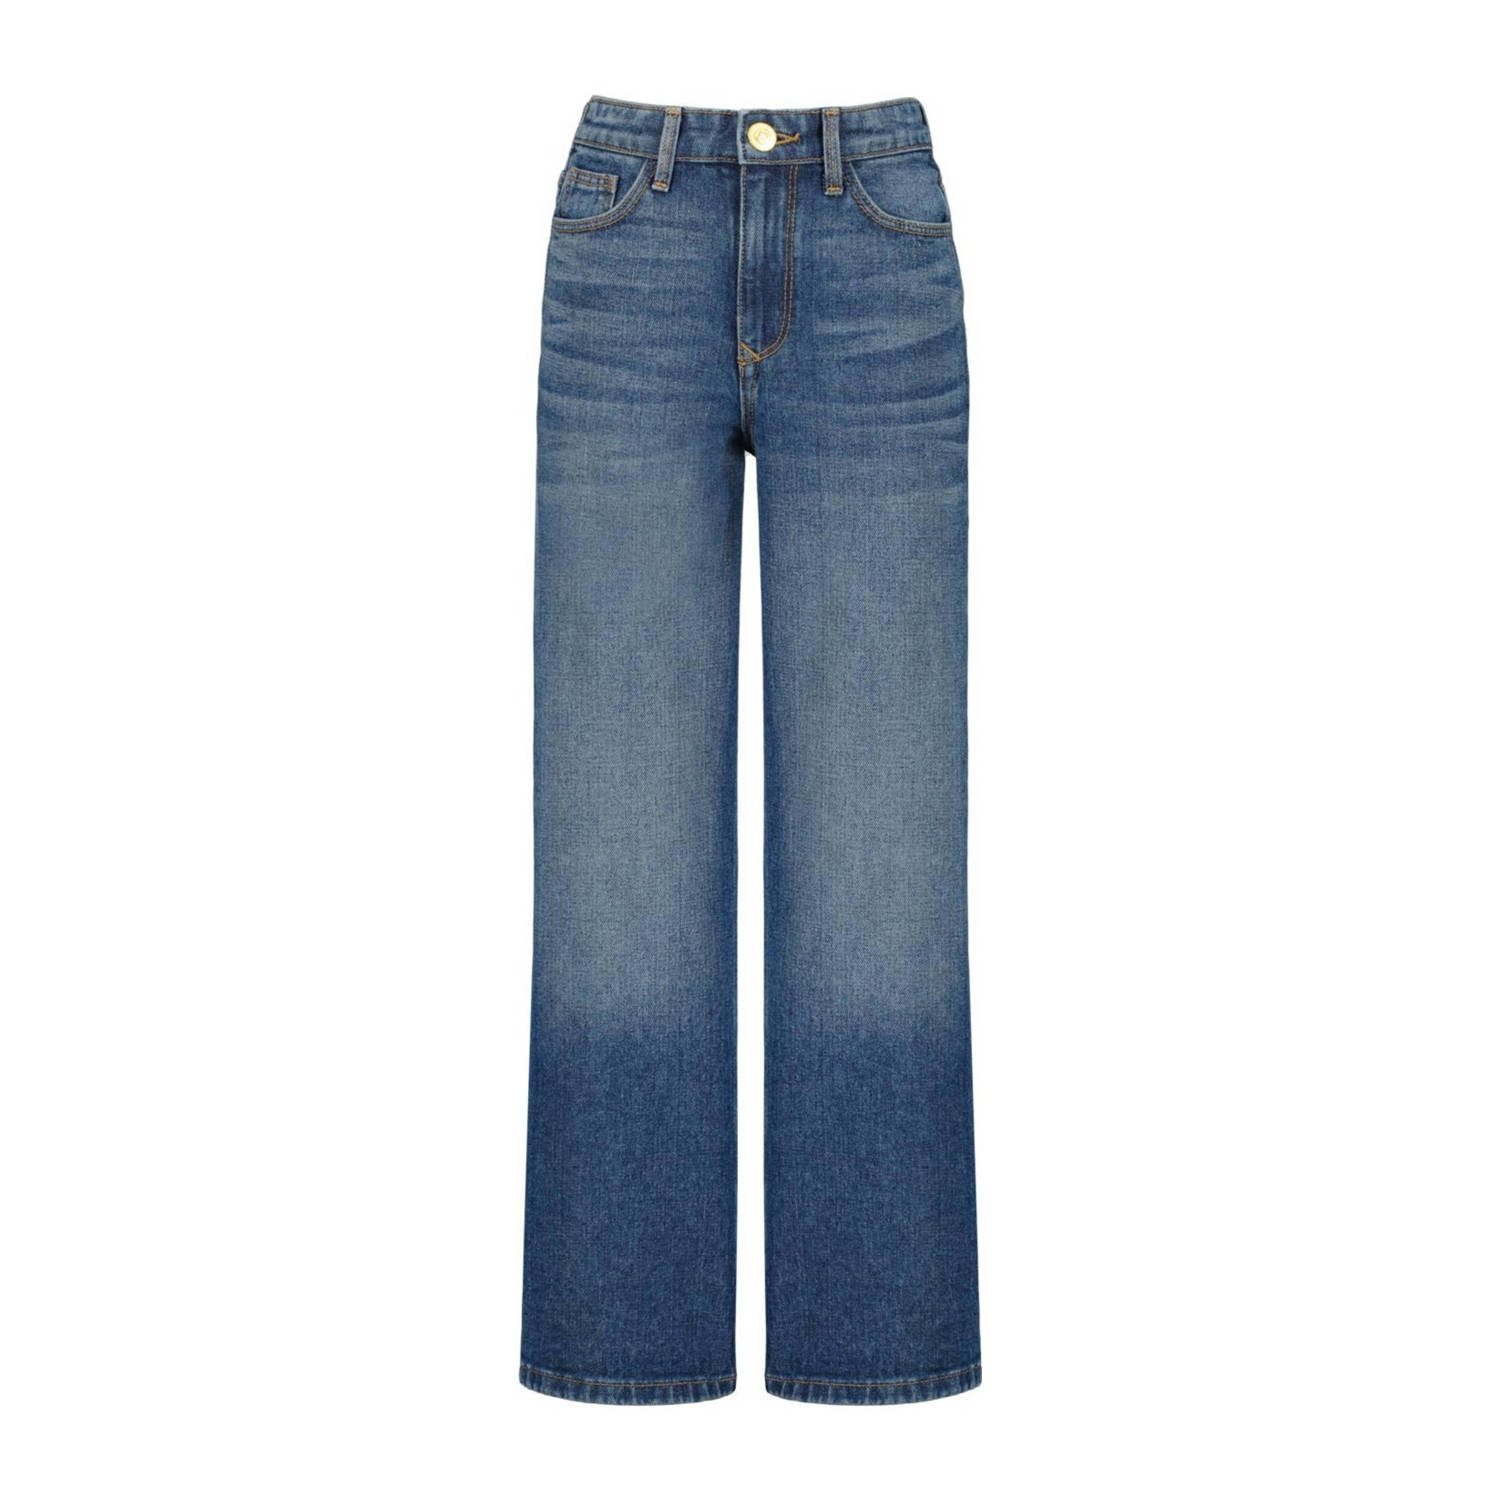 Raizzed high waist loose fit jeans Miami mid blue stone Blauw Meisjes Stretchdenim 146